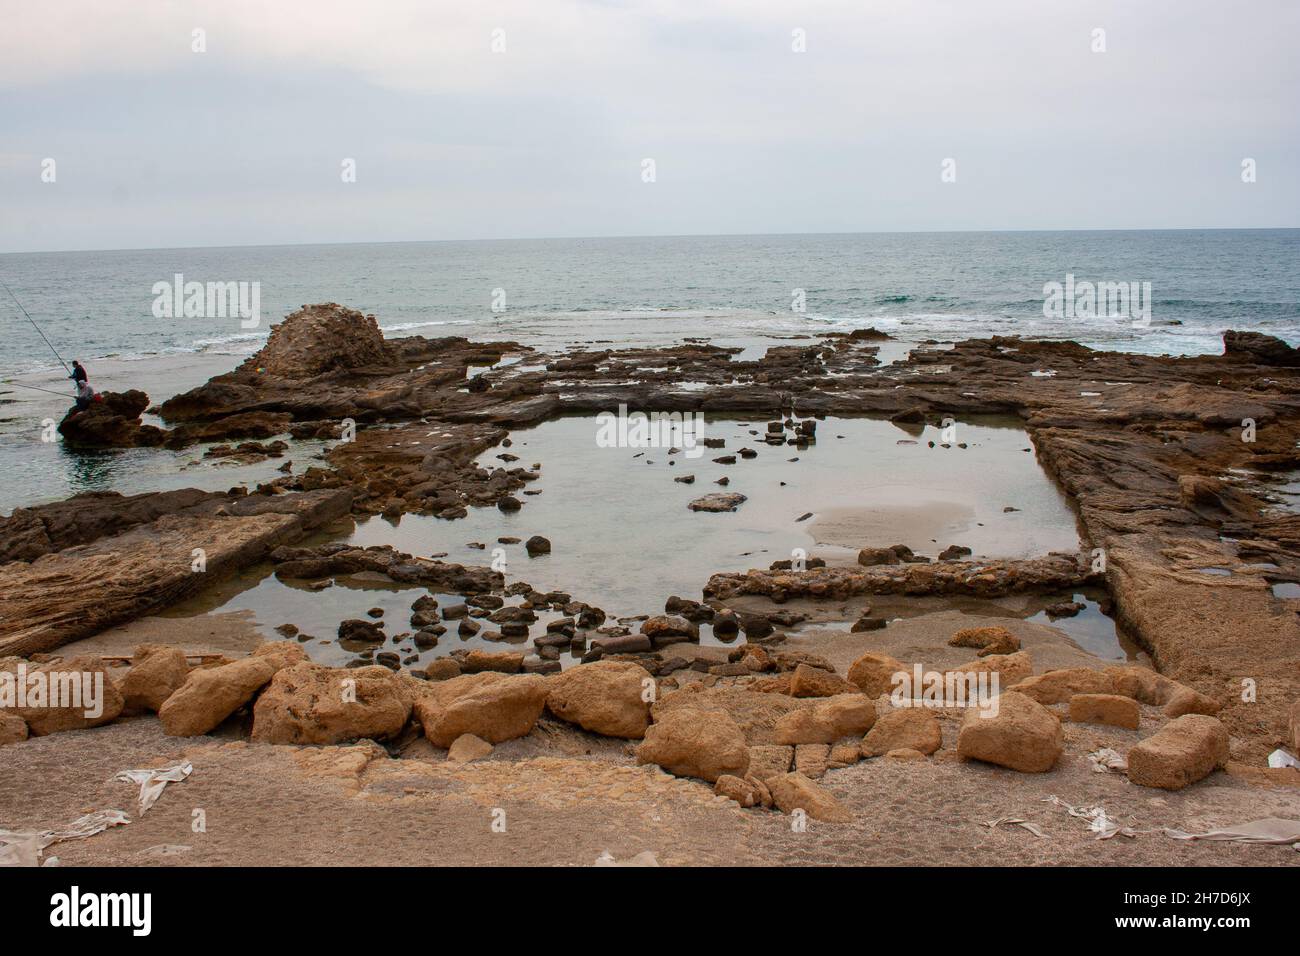 The ancient port of Caesarea, Israel Stock Photo